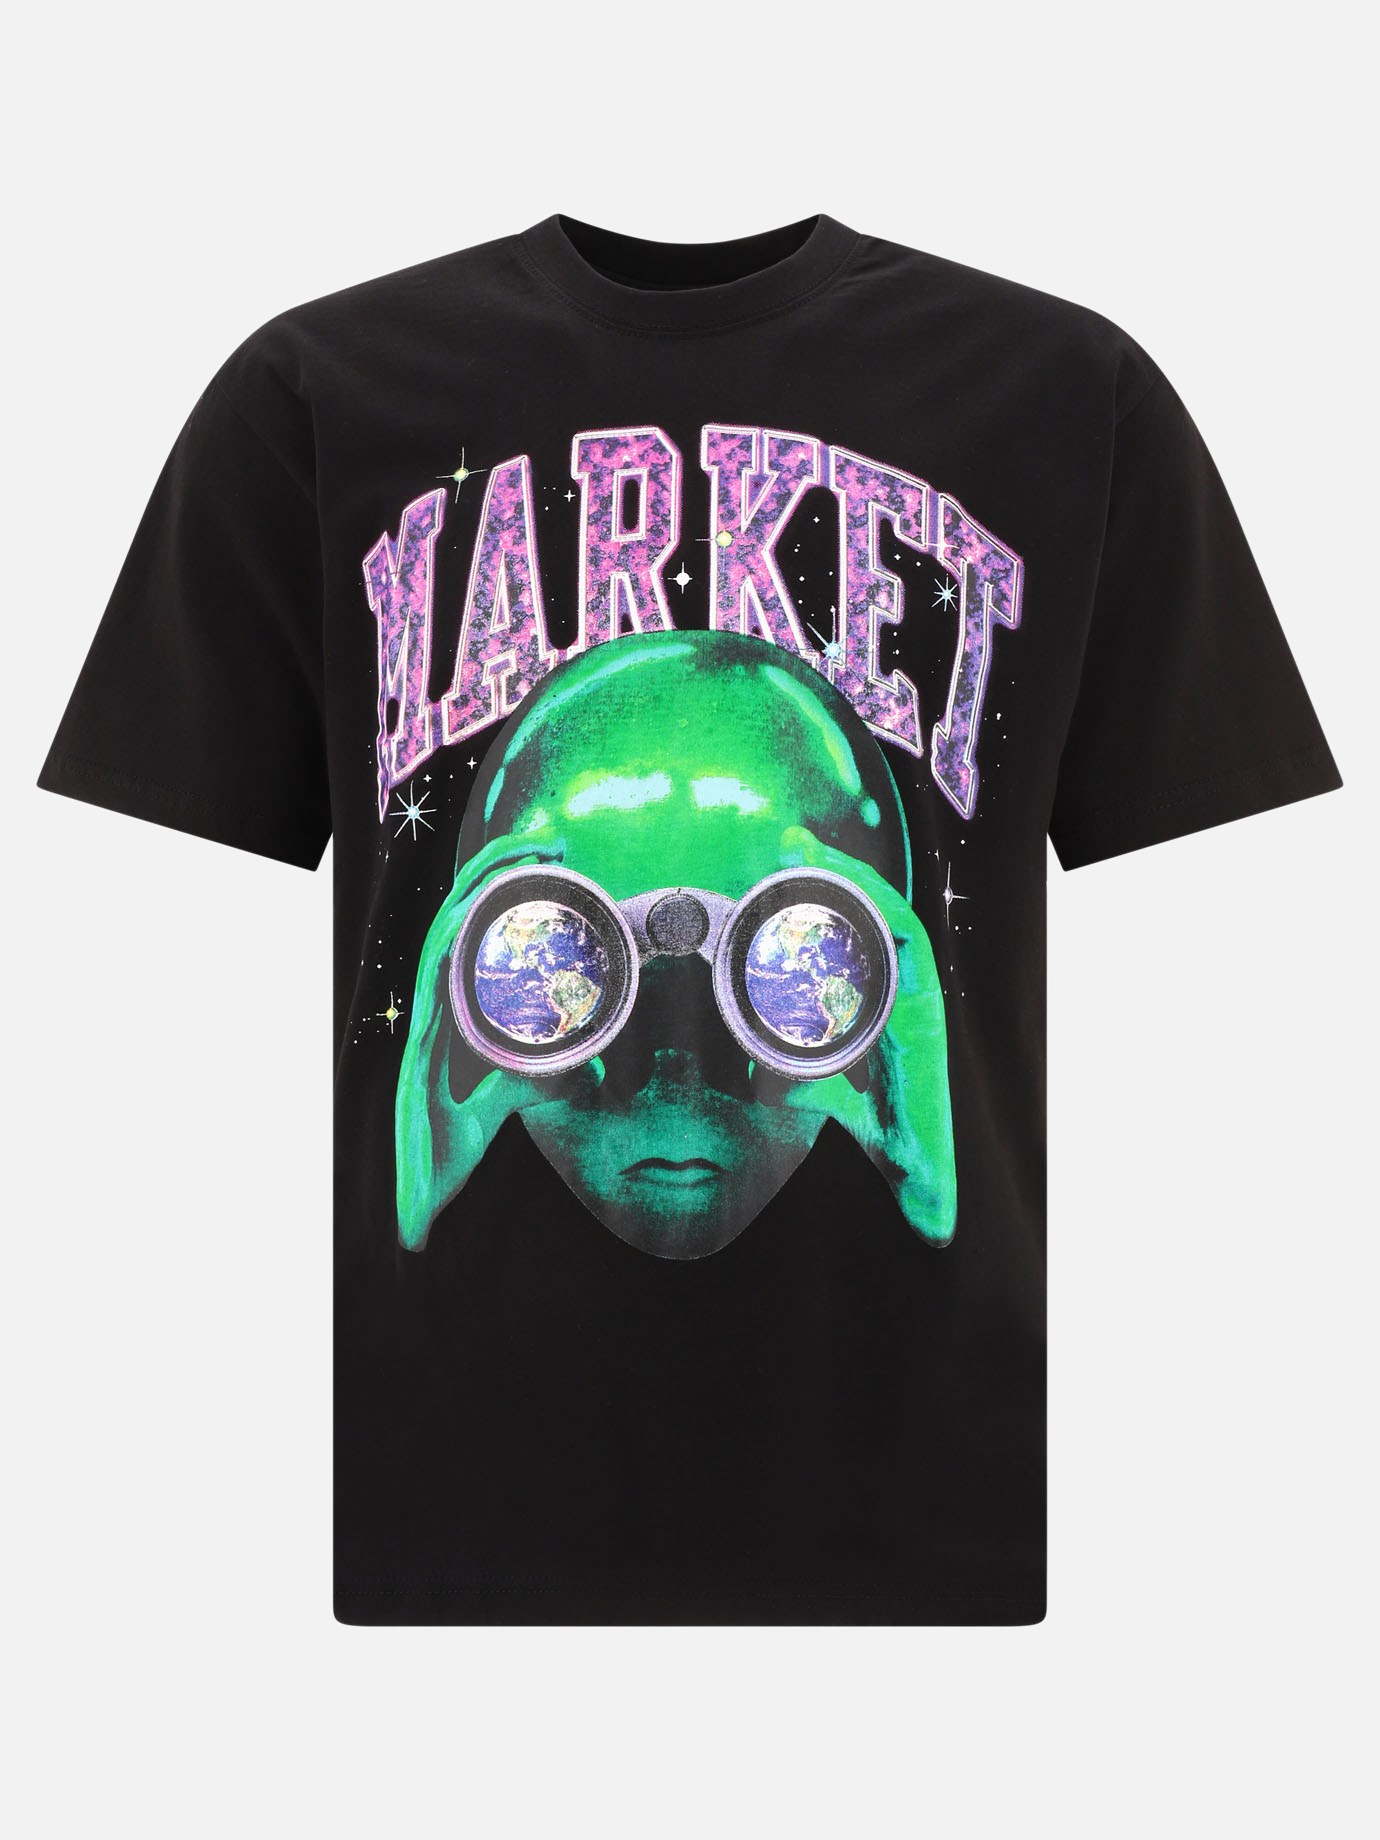  Alien Sightseeing  t-shirtby Market - 1